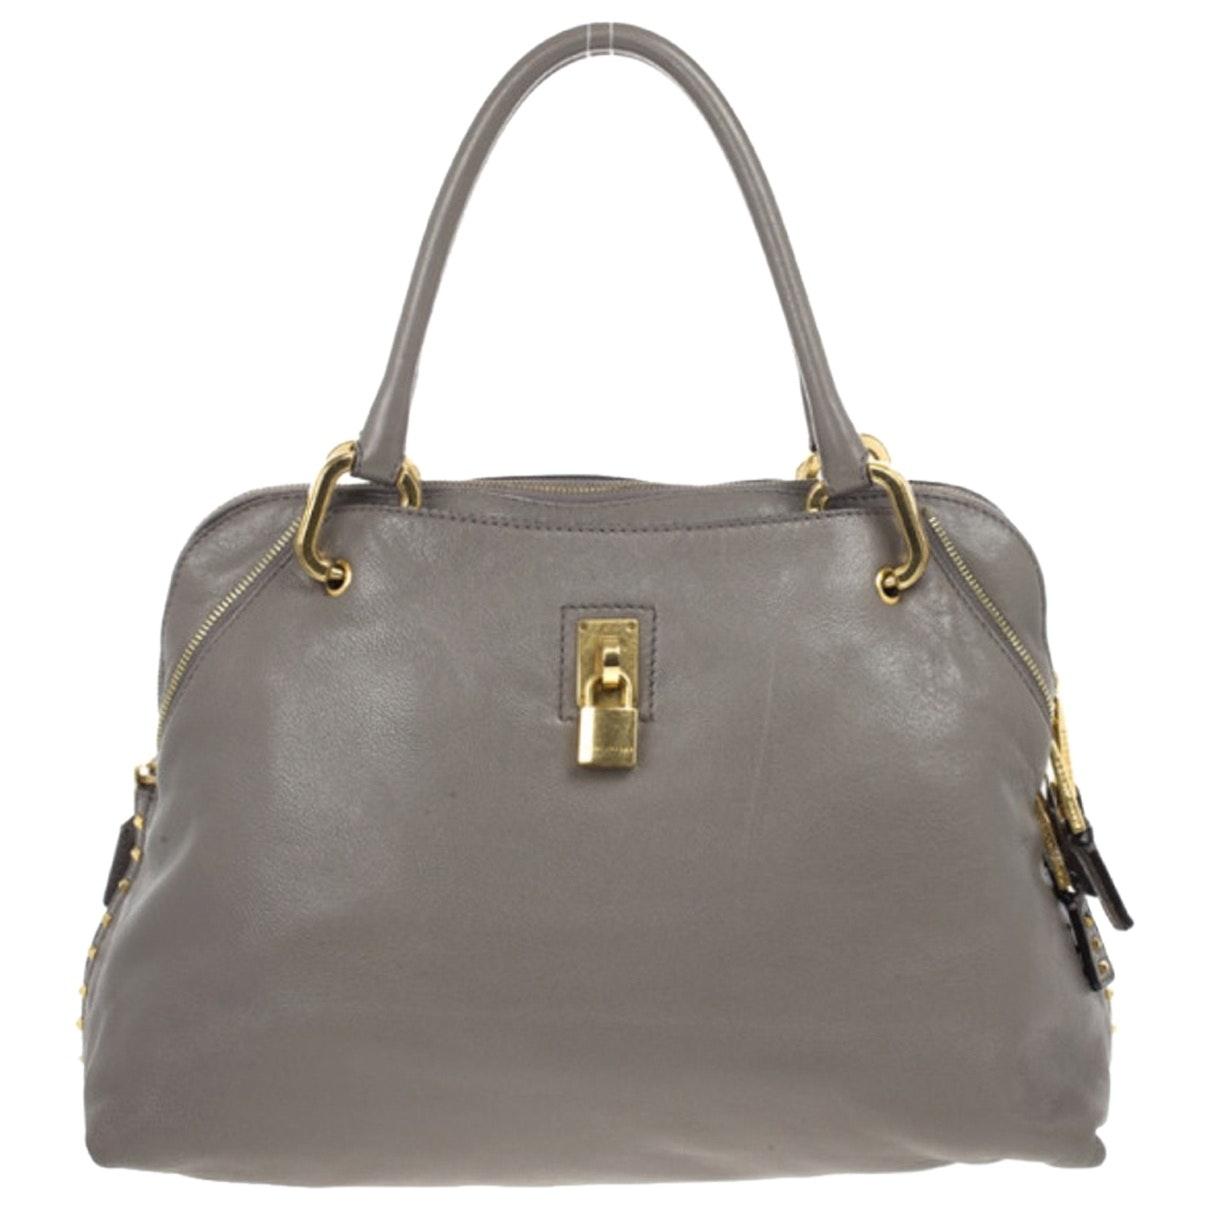 Marc Jacobs Grey Leather Handbag in Gray - Lyst